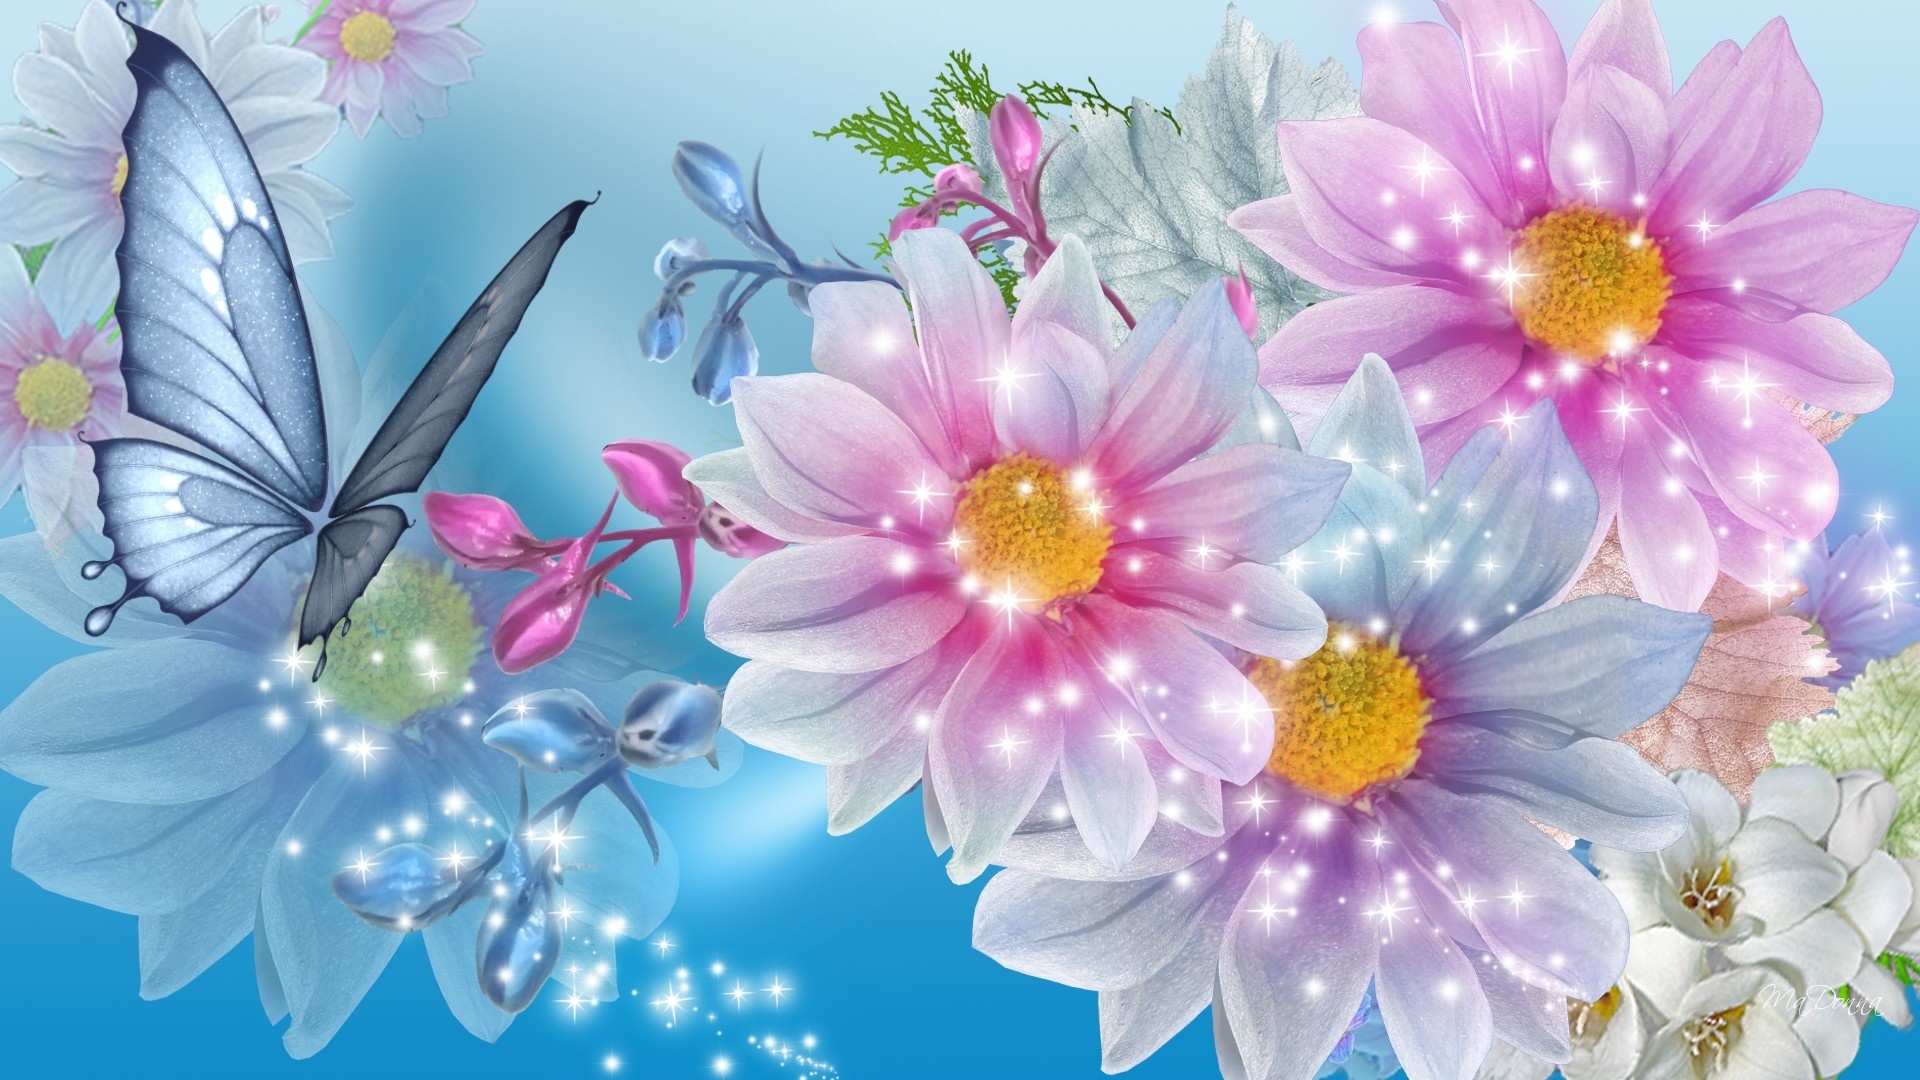 51 Flower Wallpaper Images